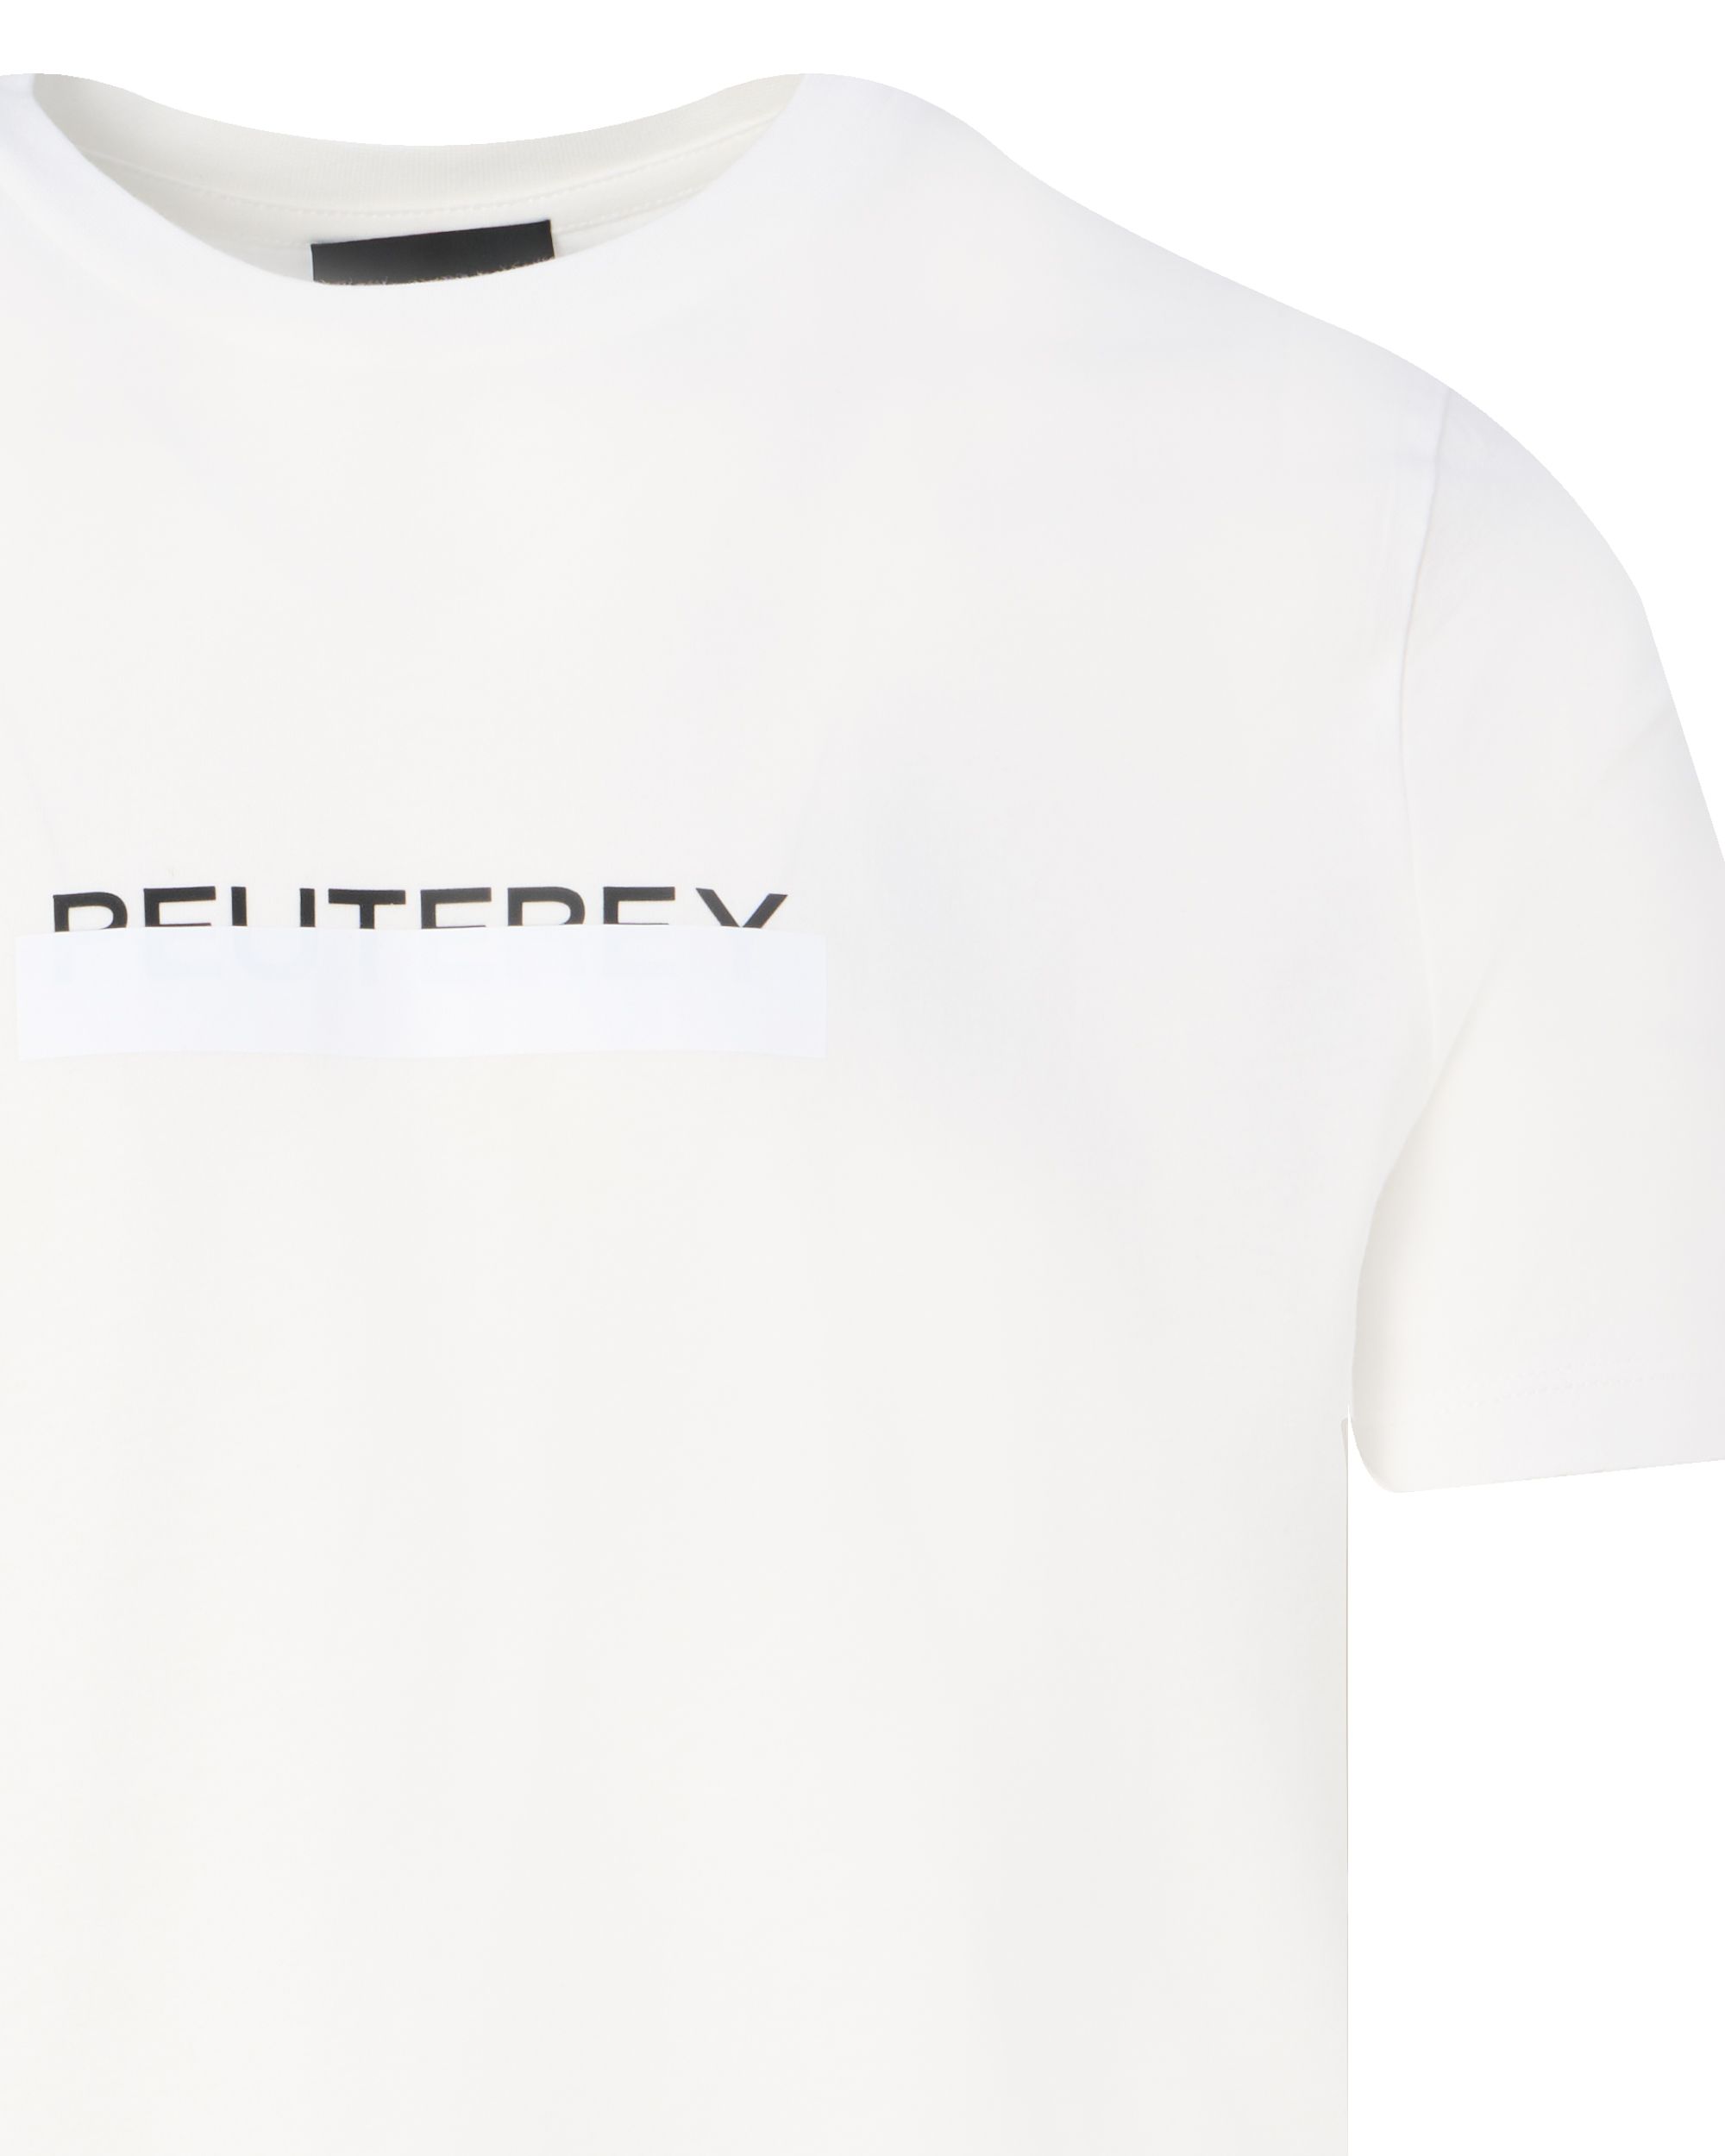 Peuterey Manderly T-shirt KM Wit 094276-001-L